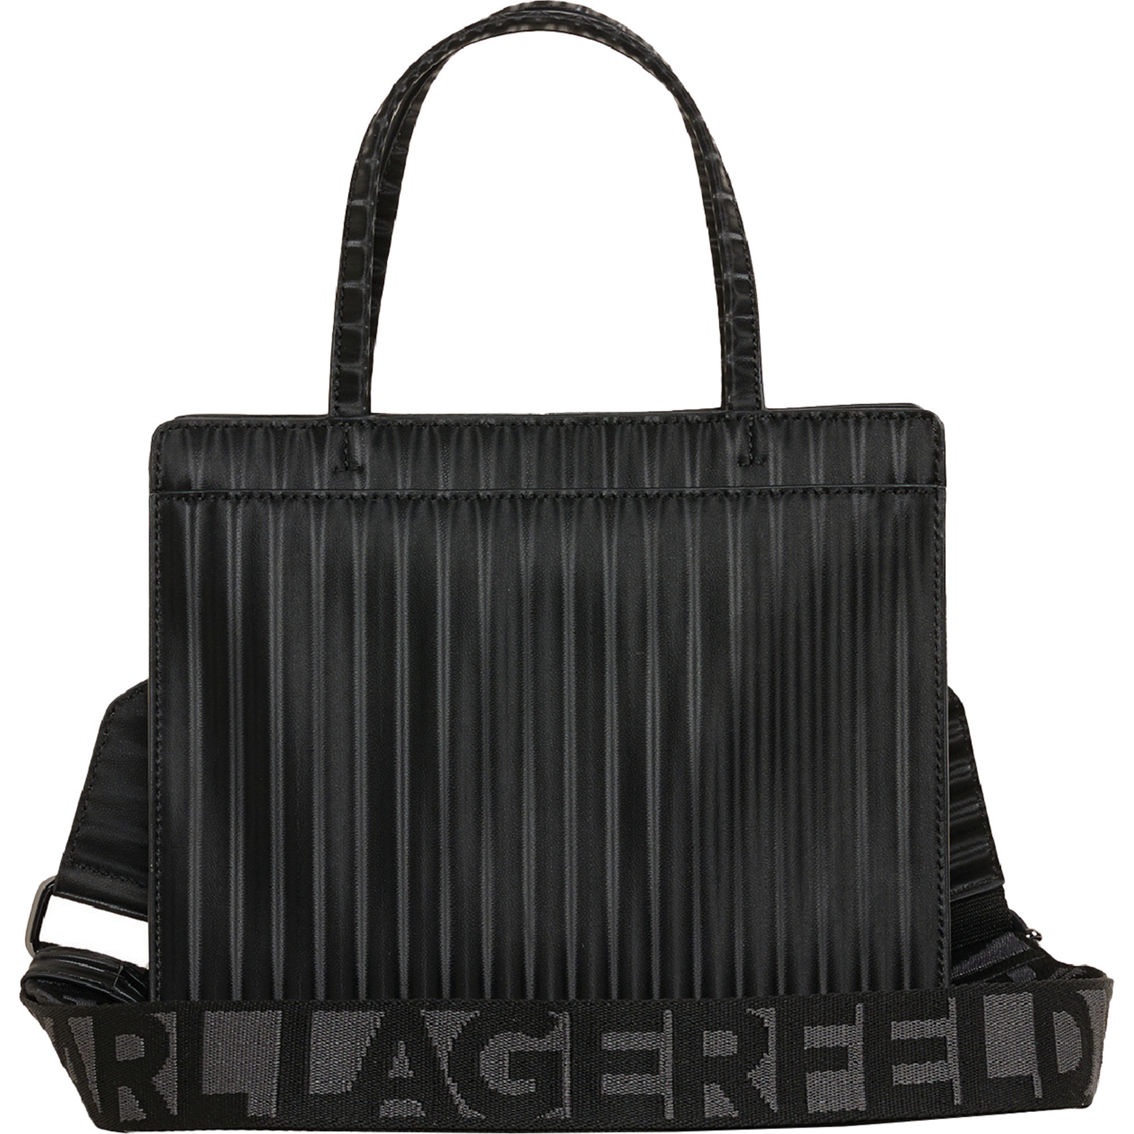 Karl Lagerfeld Maybelle Satchel, Black Leather - Image 2 of 3